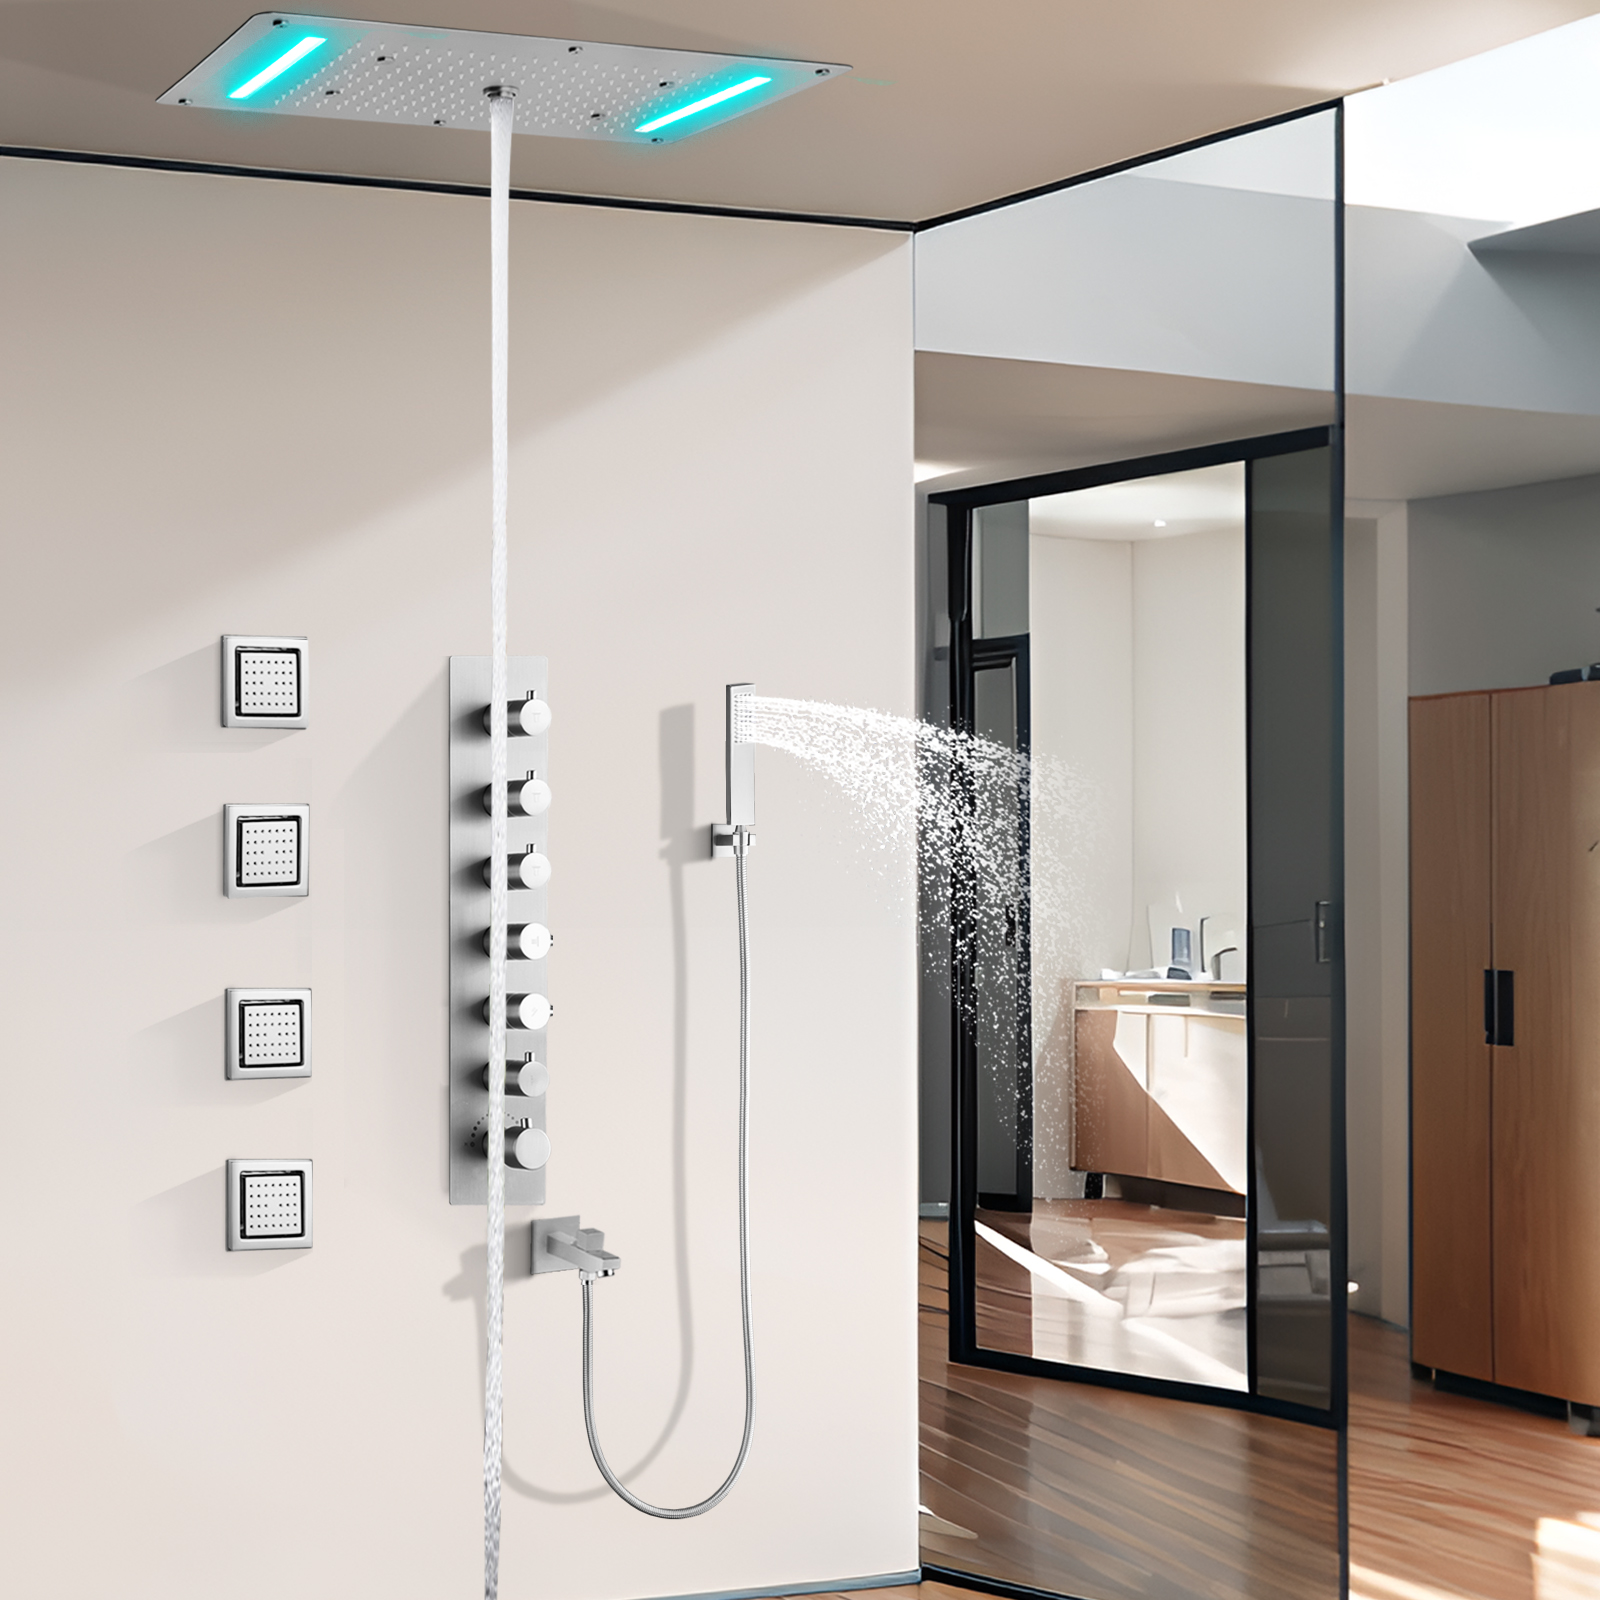 Ritting-Cabezal de ducha de níquel, temperatura constante, enjuague el baño, Panel LED para ducha moderno y oscuro, atomizador para Spa